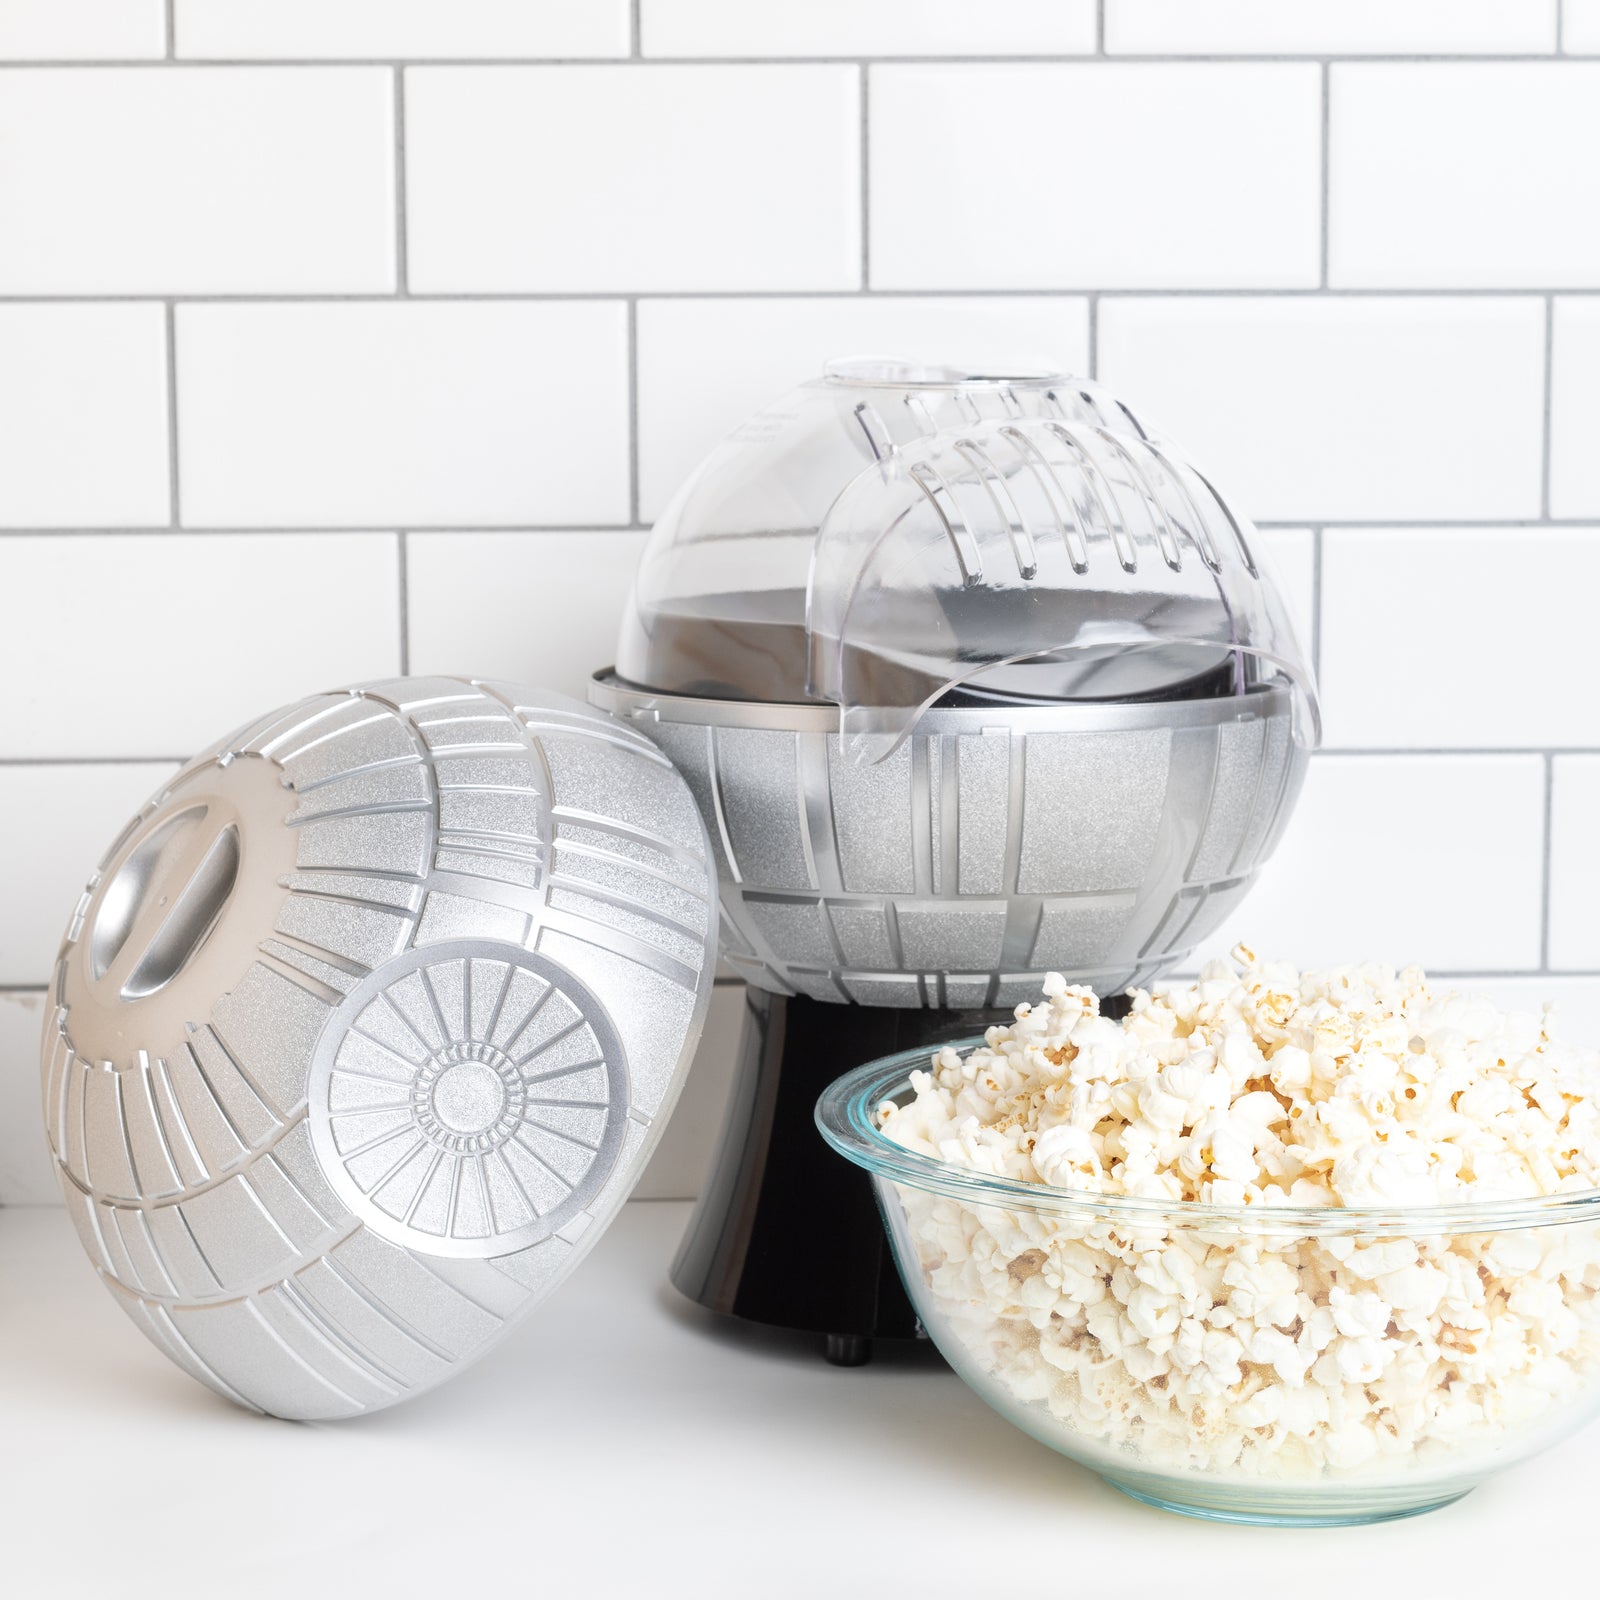  Uncanny Brands Star Wars R2D2 Popcorn Maker- Fully Operational  Droid Kitchen Appliance: Home & Kitchen